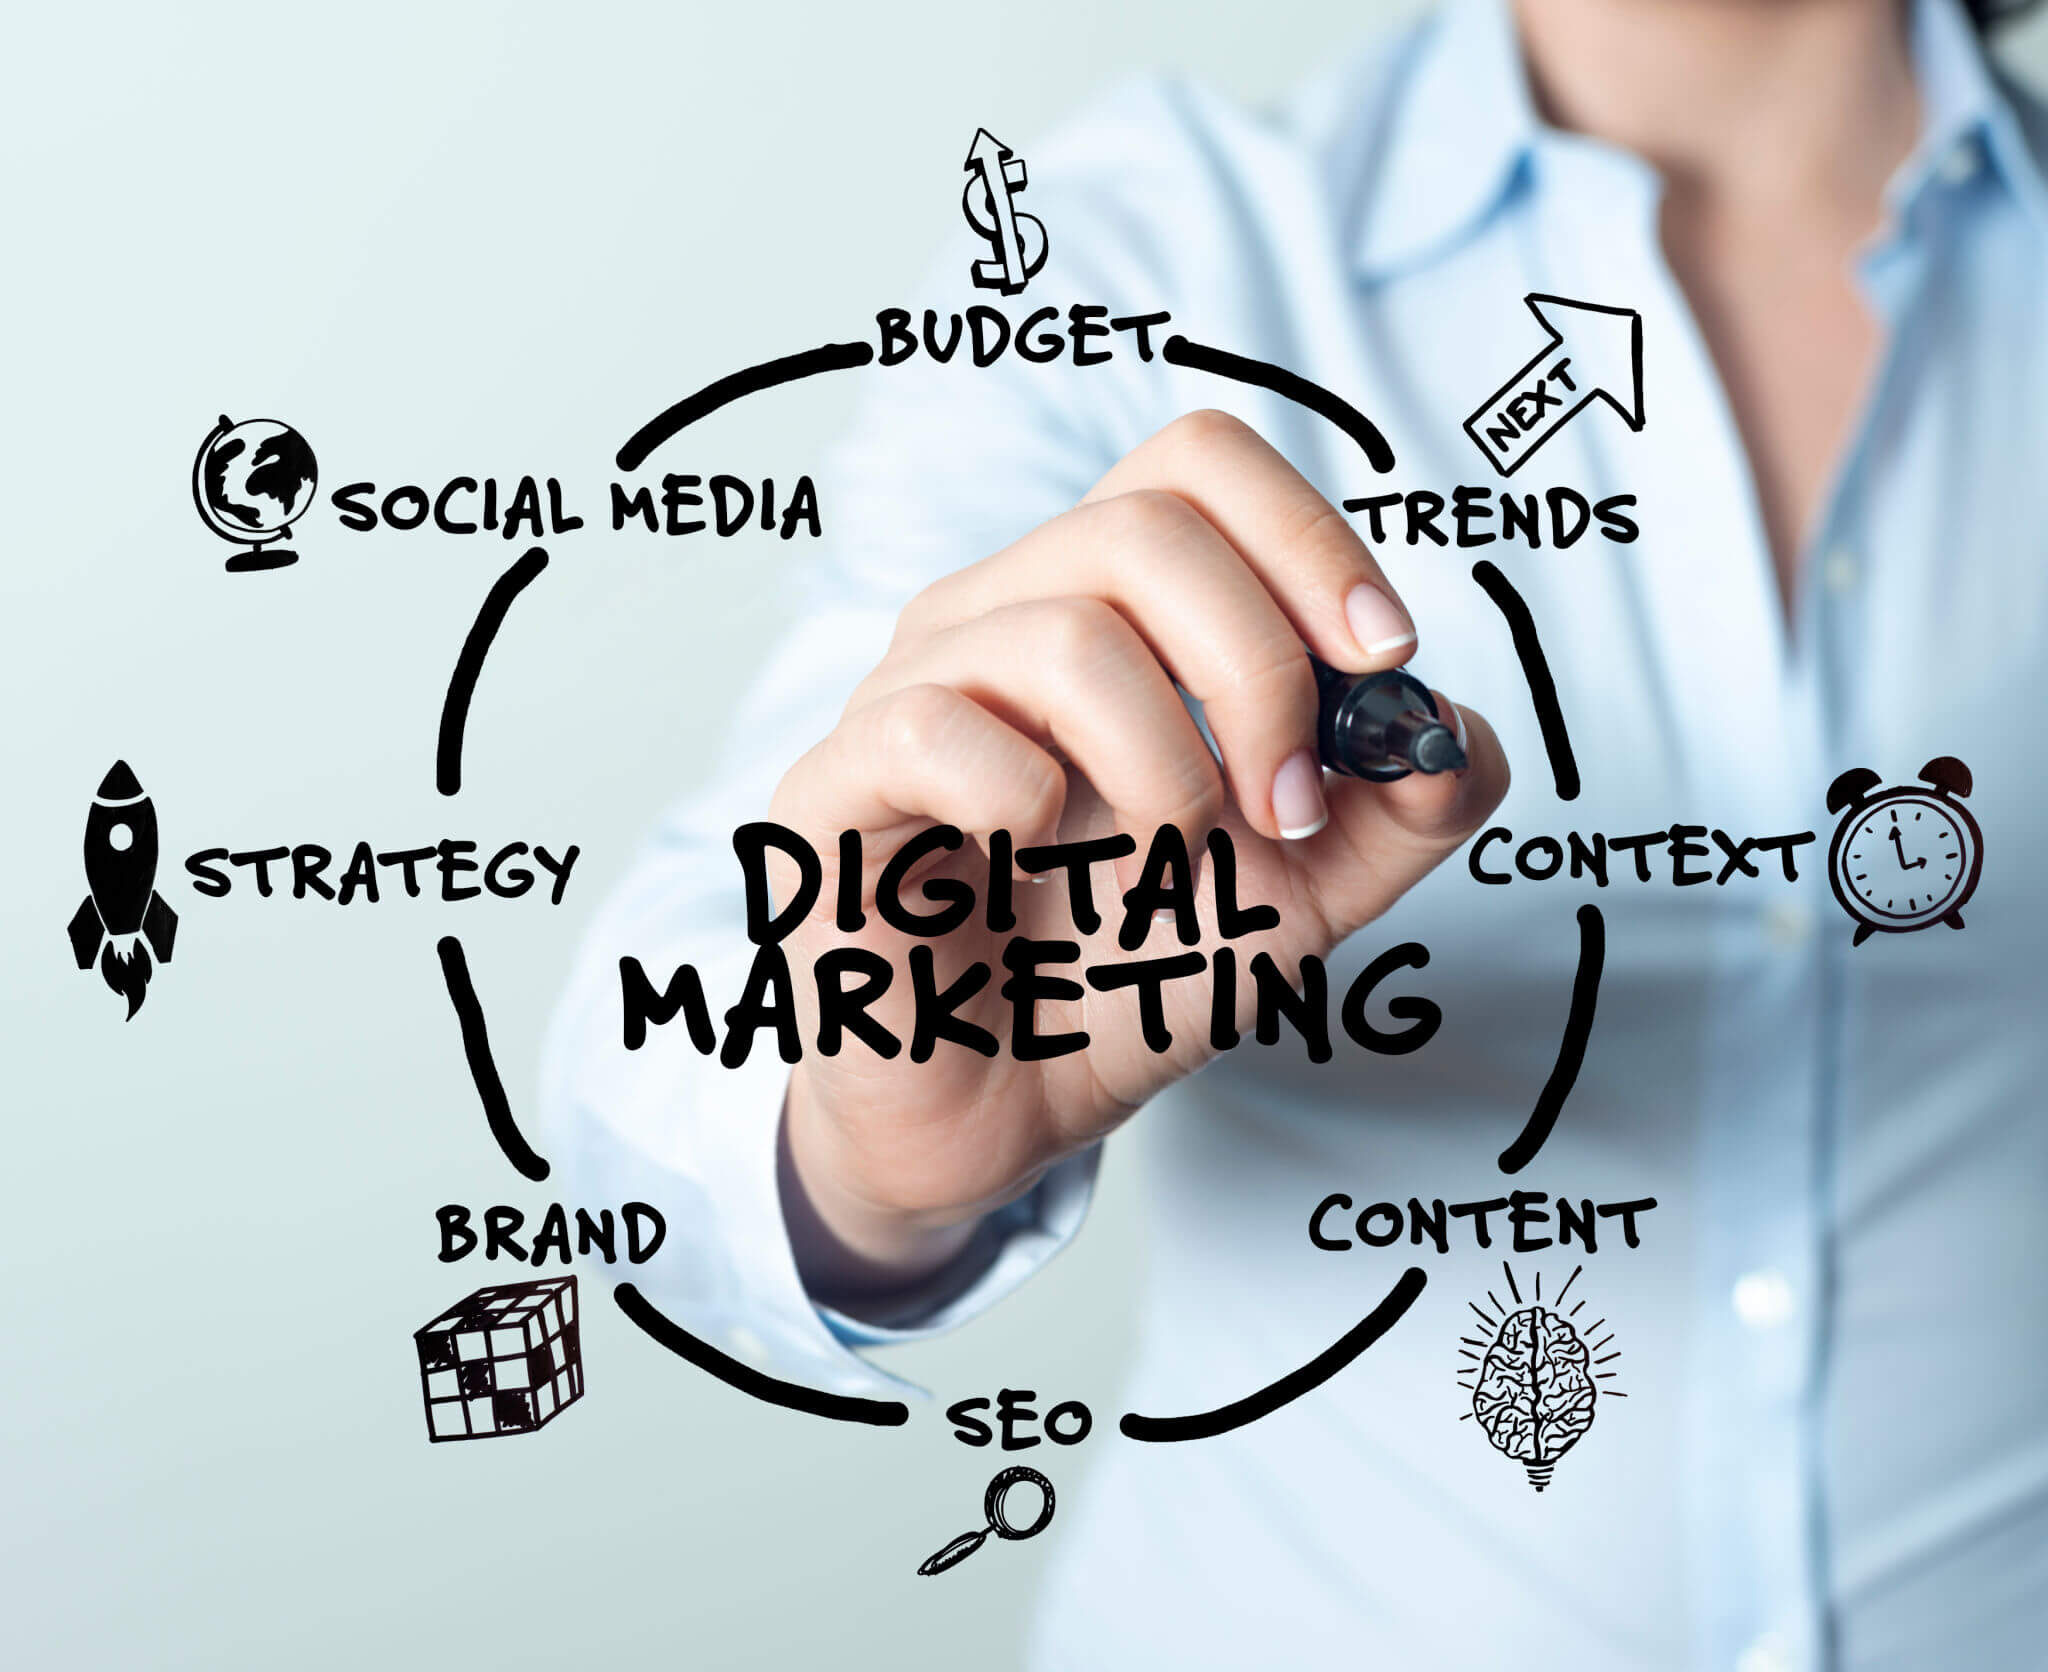 Digital Marketing strategist for brands